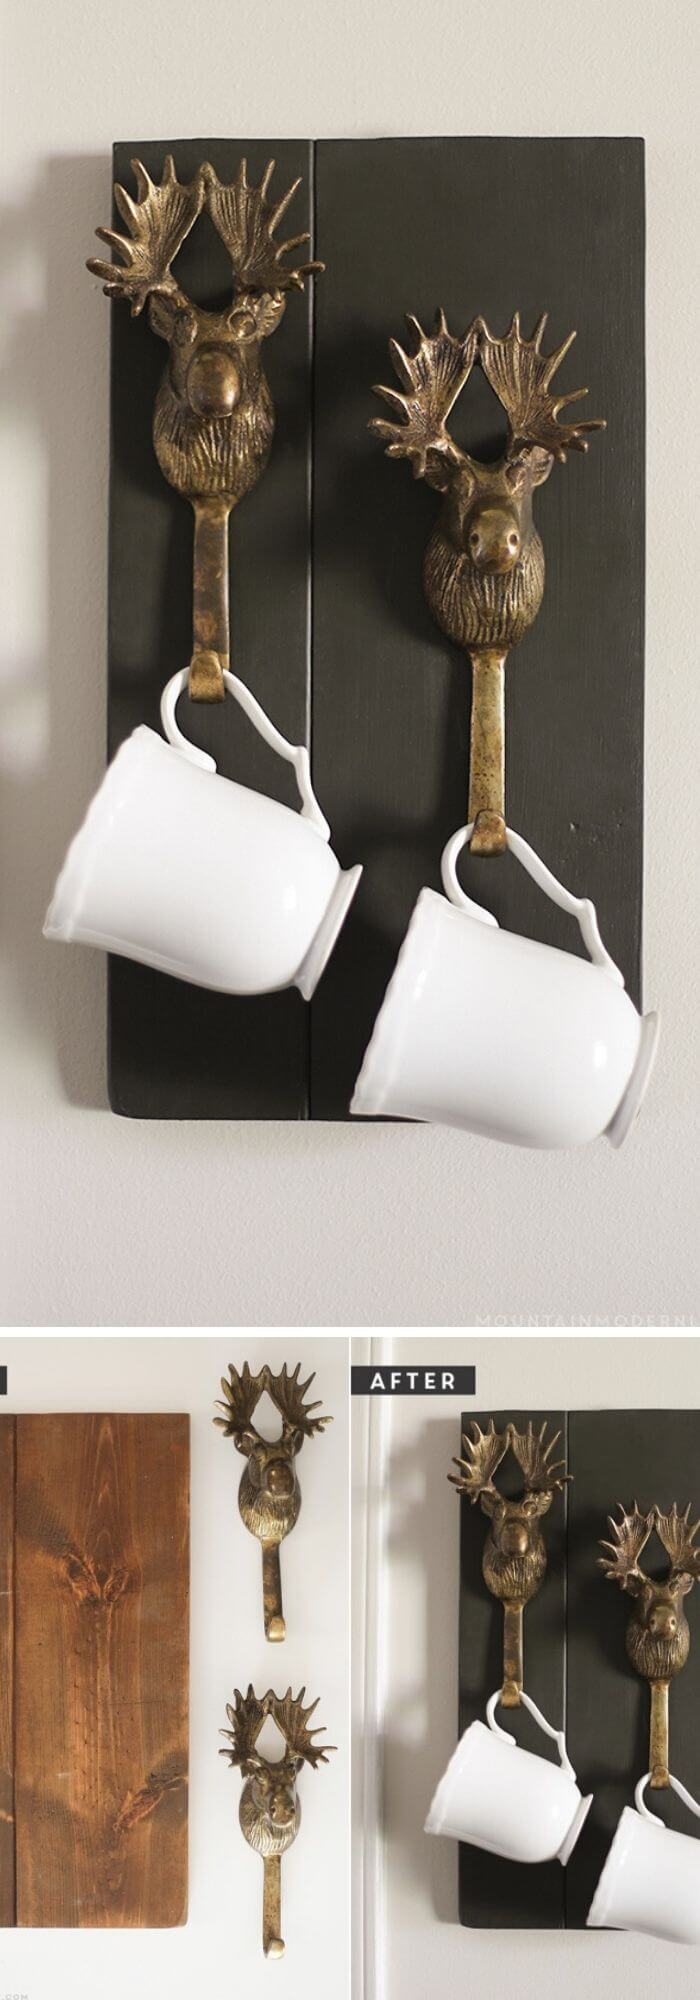 6 coffee mug holder ideas